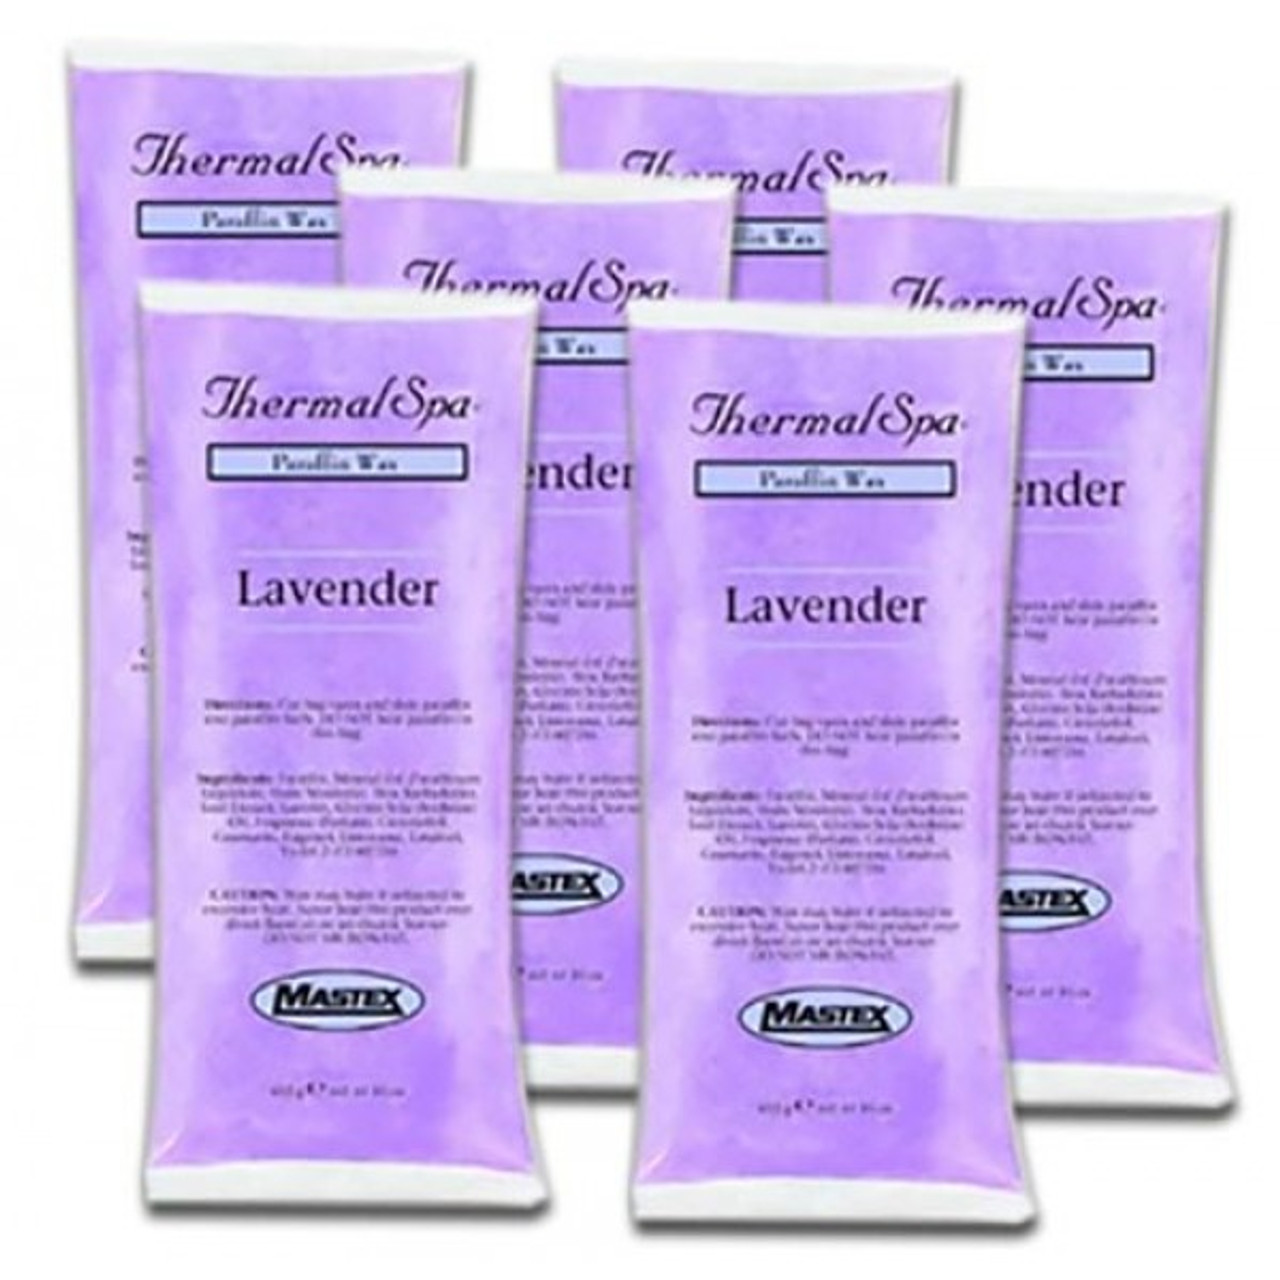 Thermal Spa Paraffin Wax Refill Lavender -  6 lbs